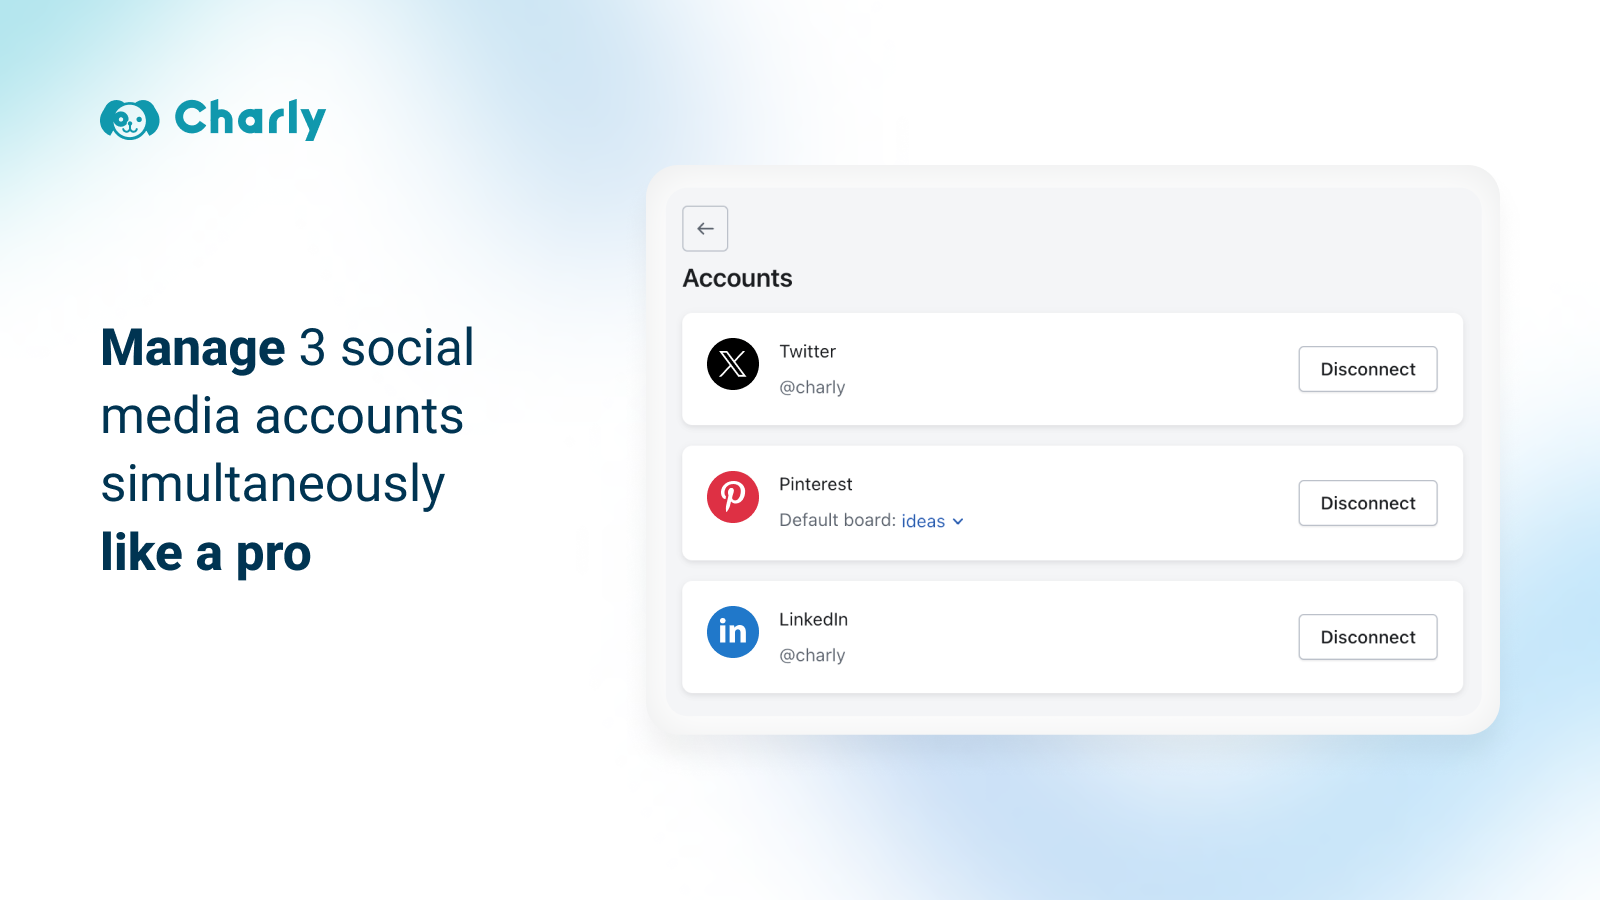 Manage 3 social media accounts simultaneously like a pro